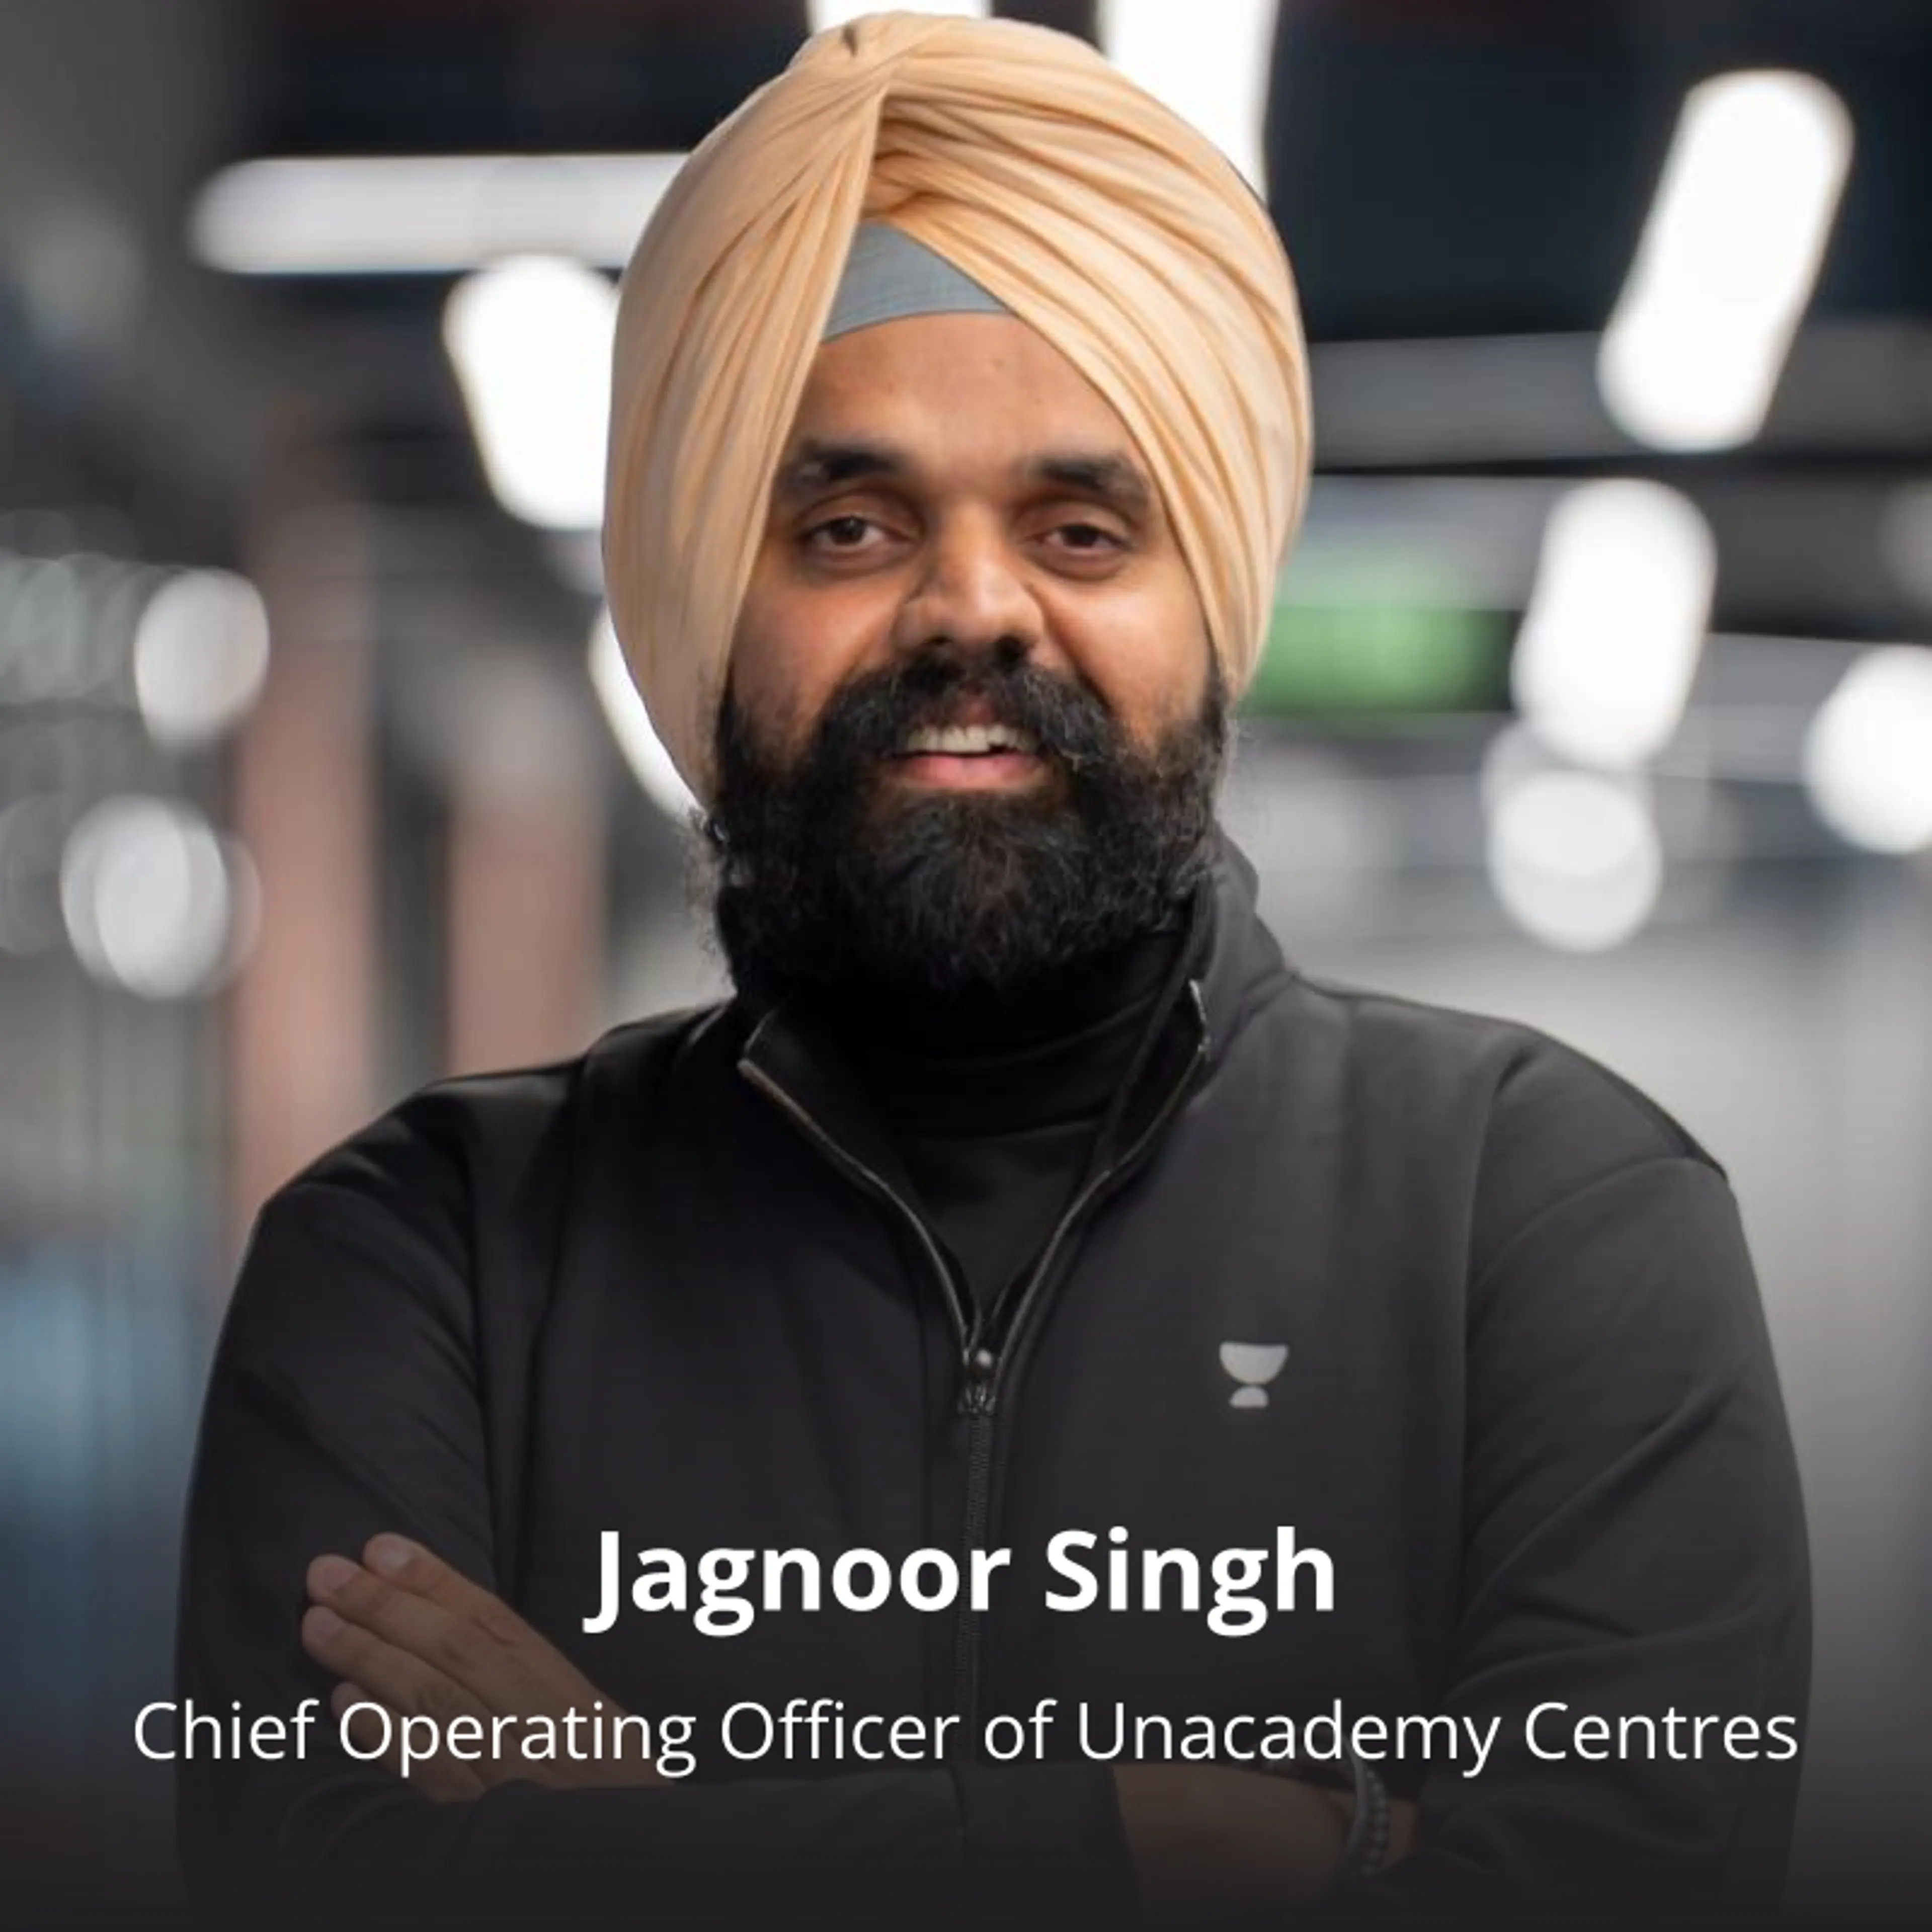 Jagnoor Singh steps down as COO of Unacademy: Report
